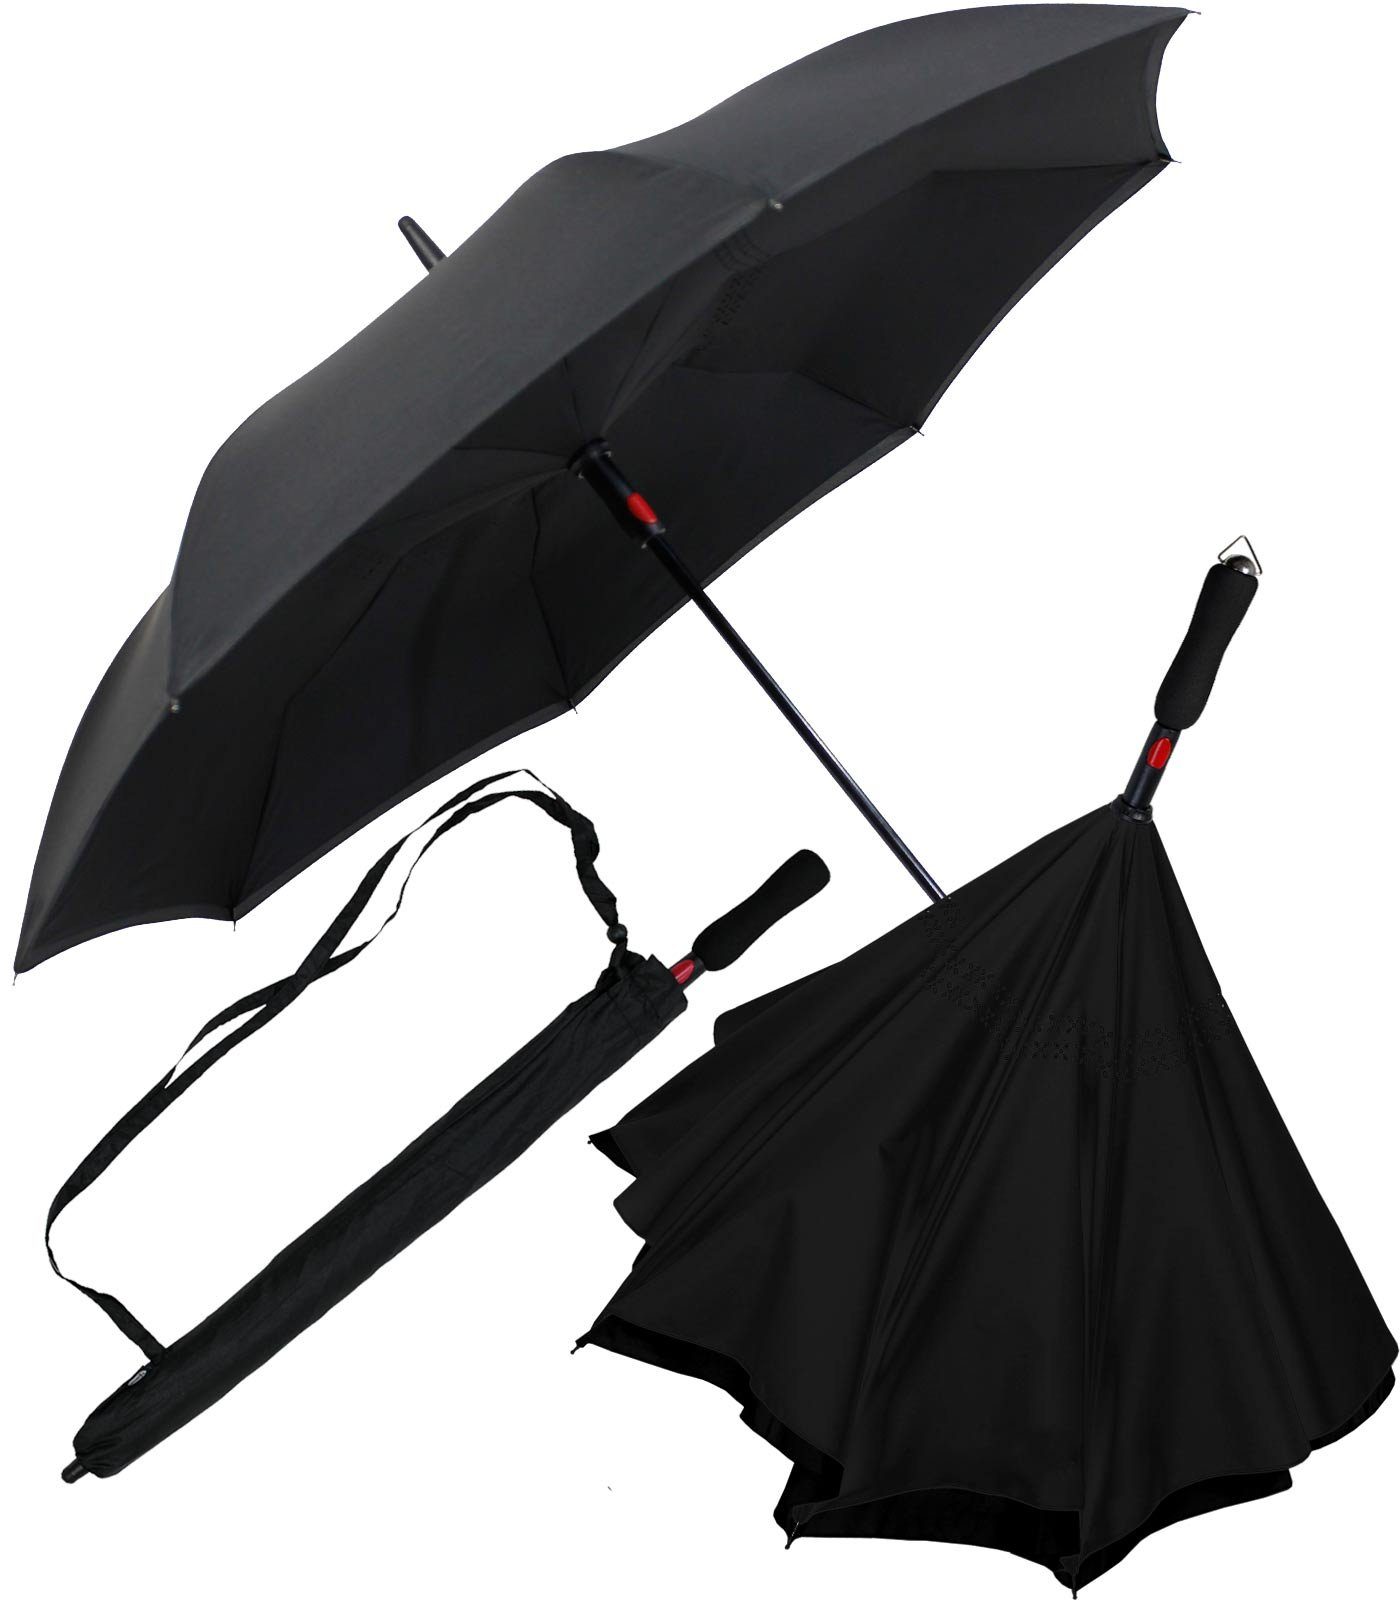 iX-brella Langregenschirm Reverse-Schirm - umgedreht zu öffnen mit Automatik, umgedreht schwarz